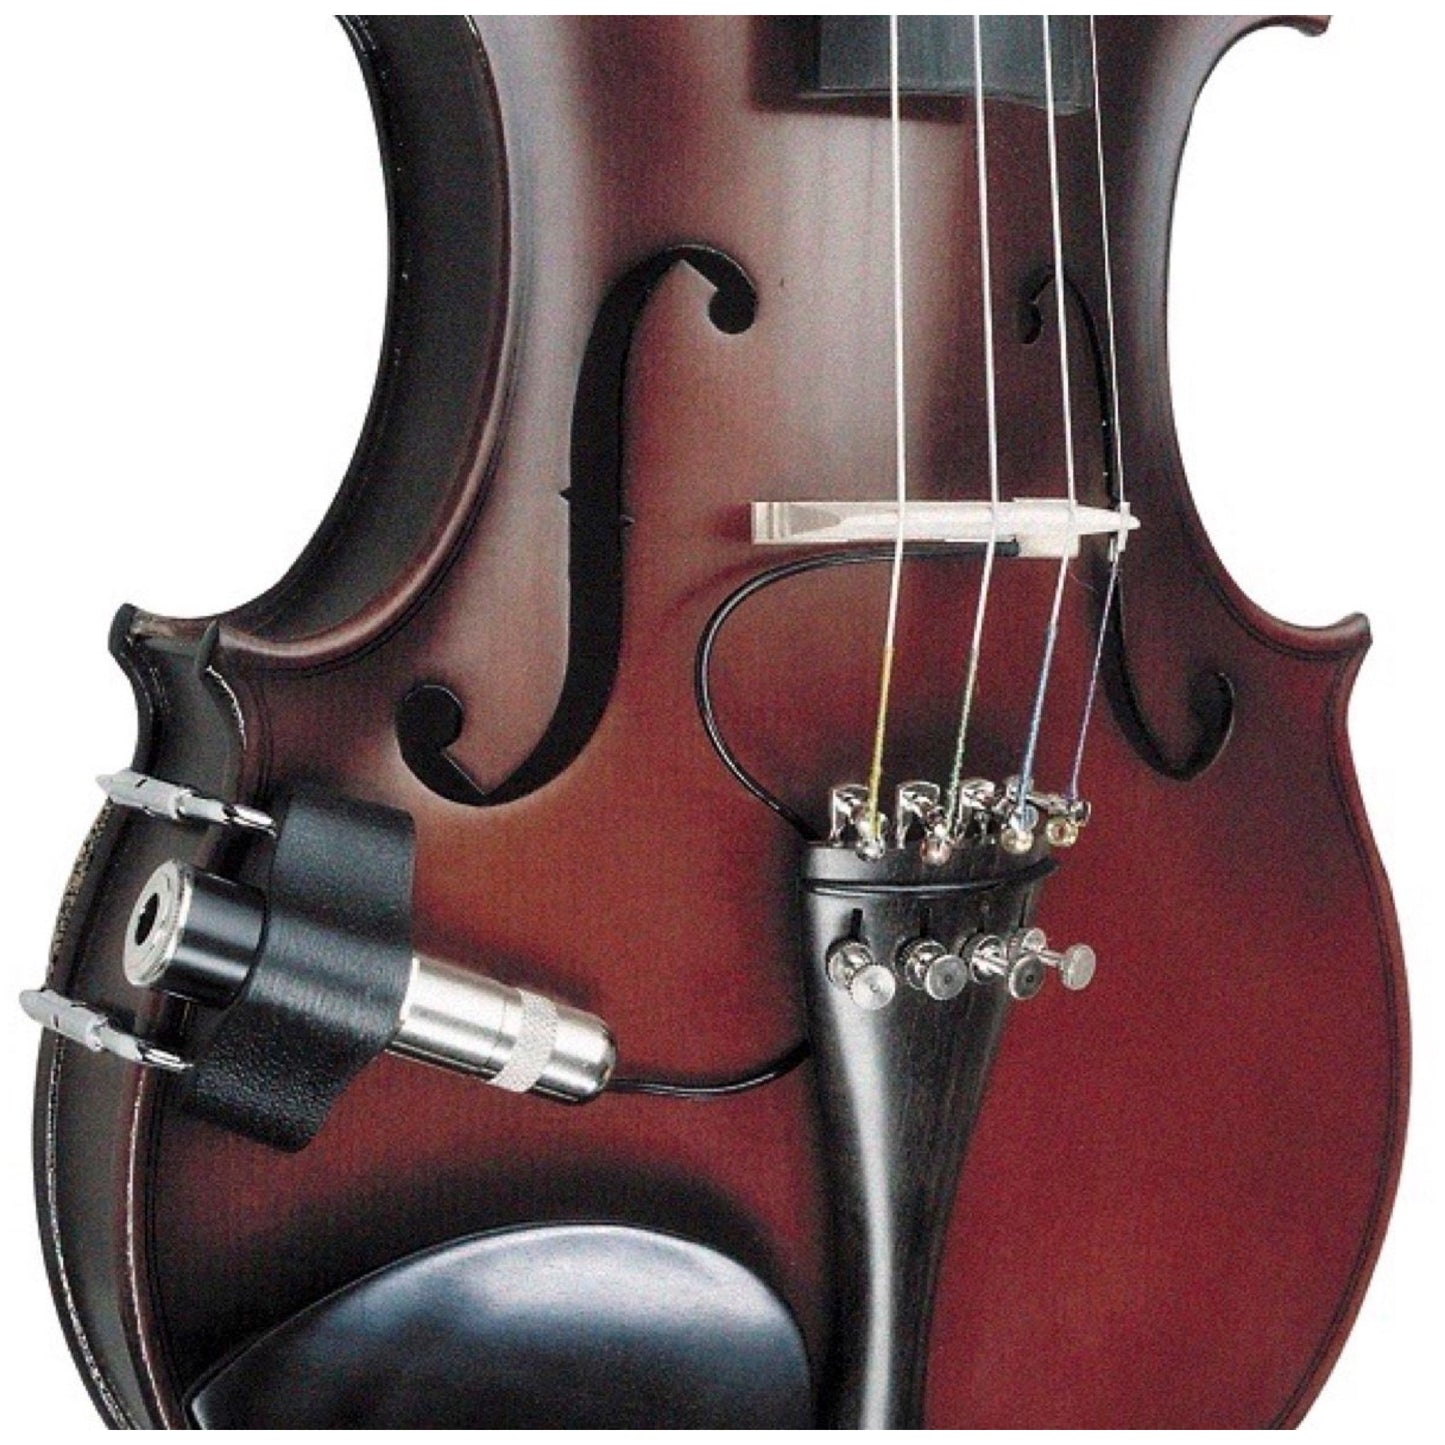 Fishman Classic Series V200 Violin Pickup